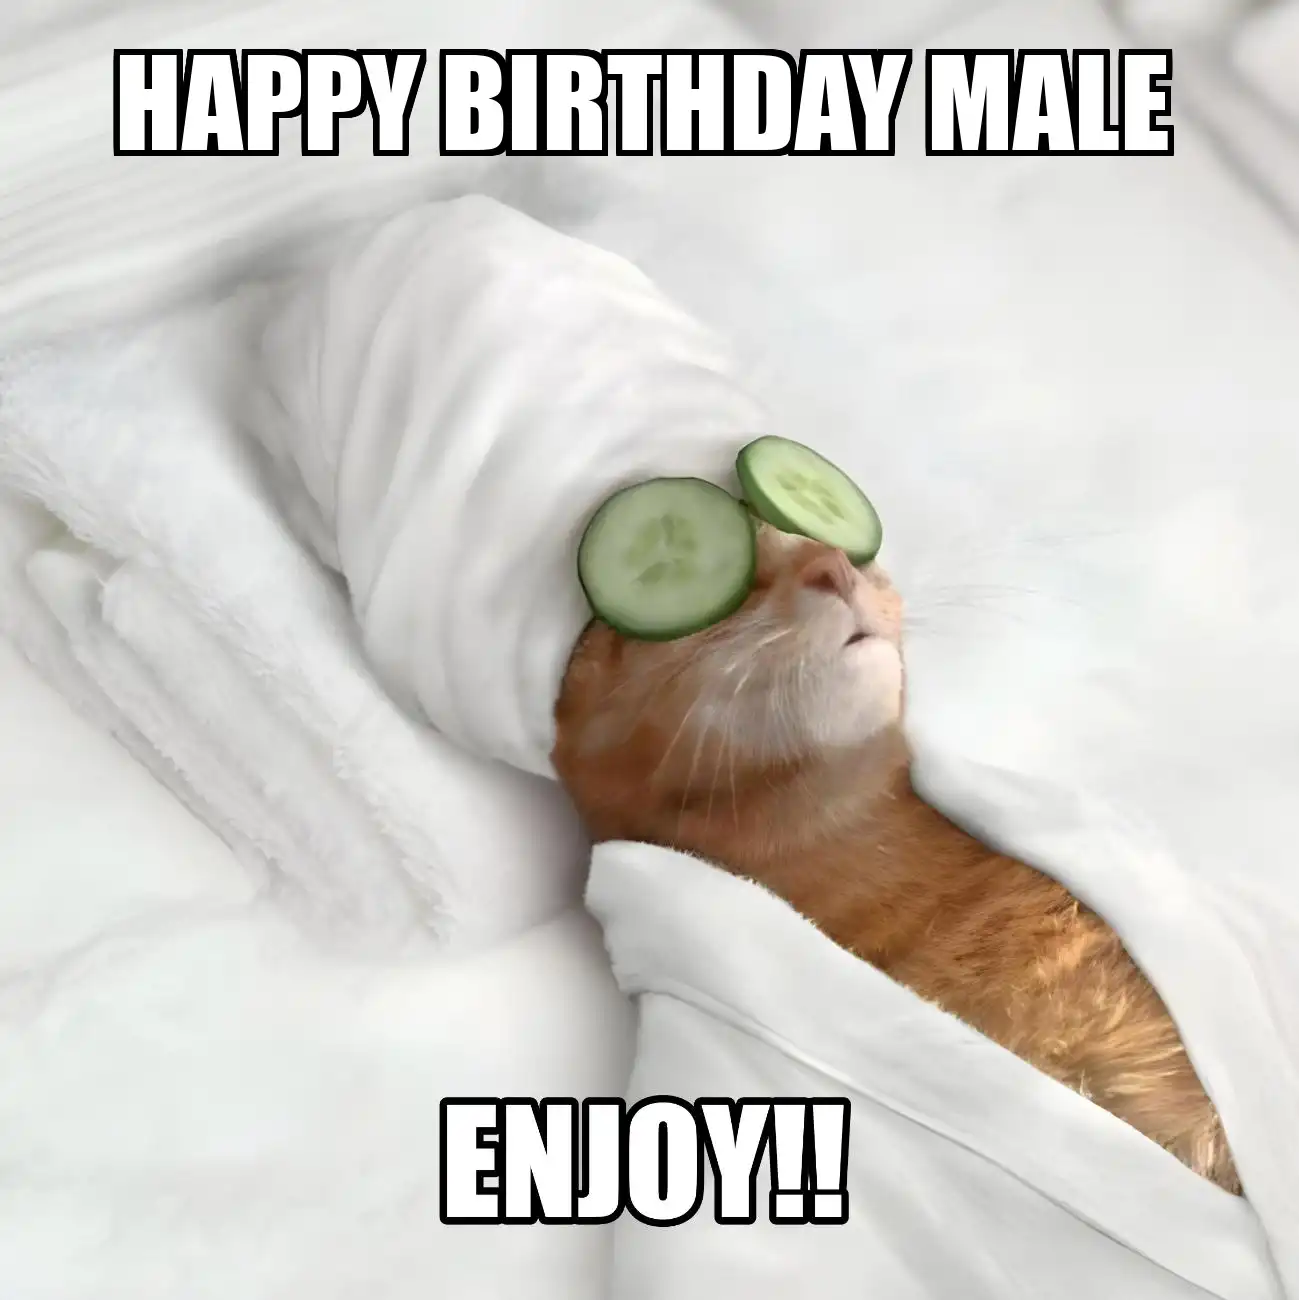 Happy Birthday Male Enjoy Cat Meme